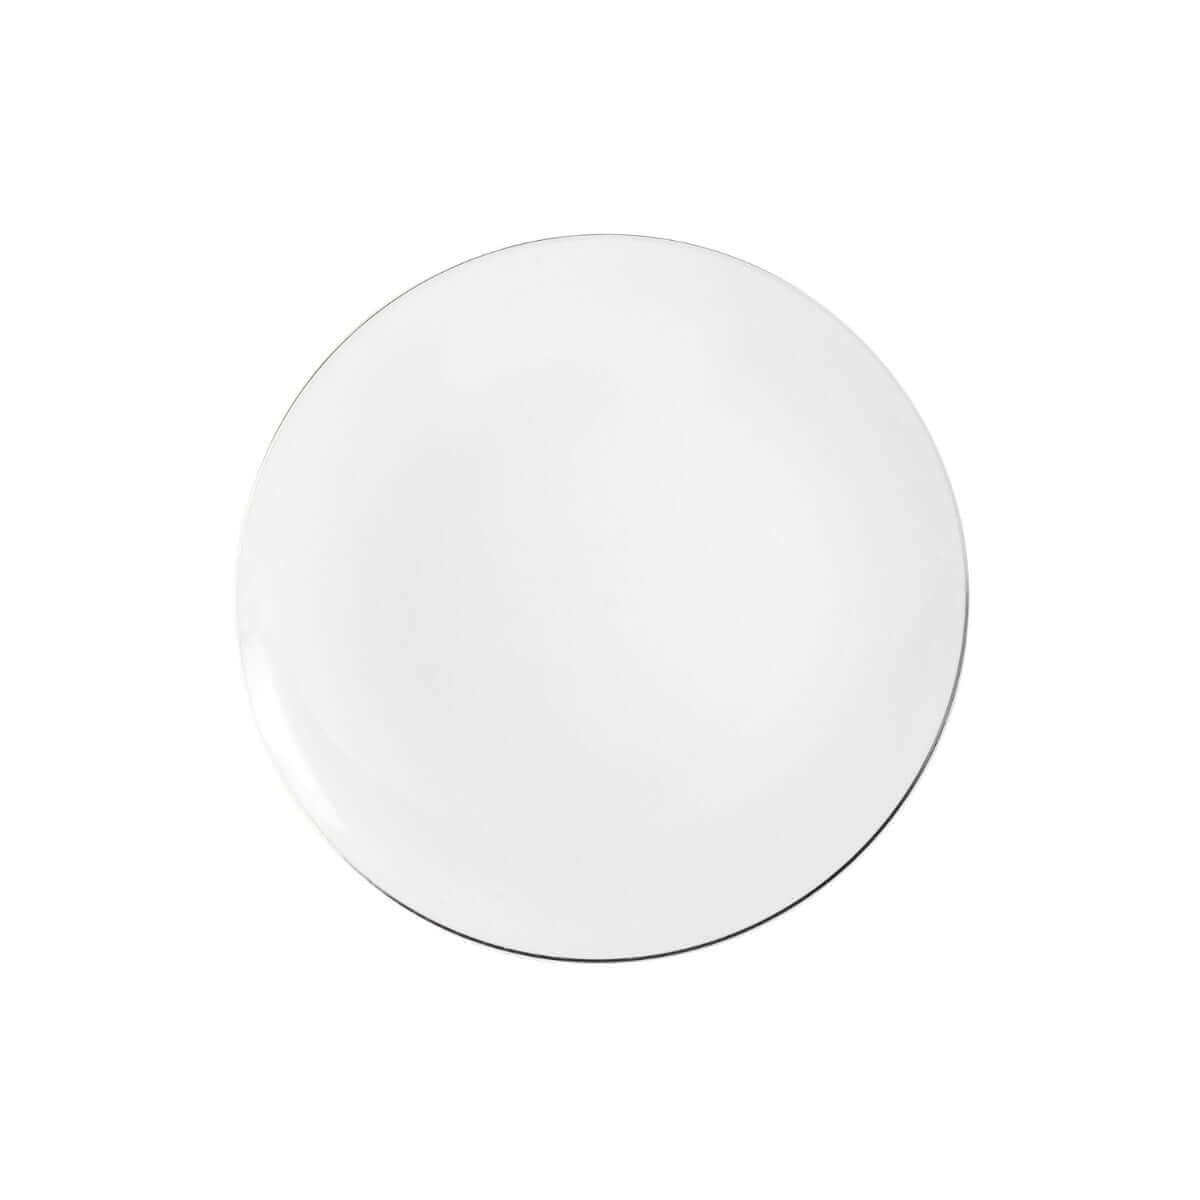 8" Classic Silver Design Plastic Plates (40 Count) - Yom Tov Settings